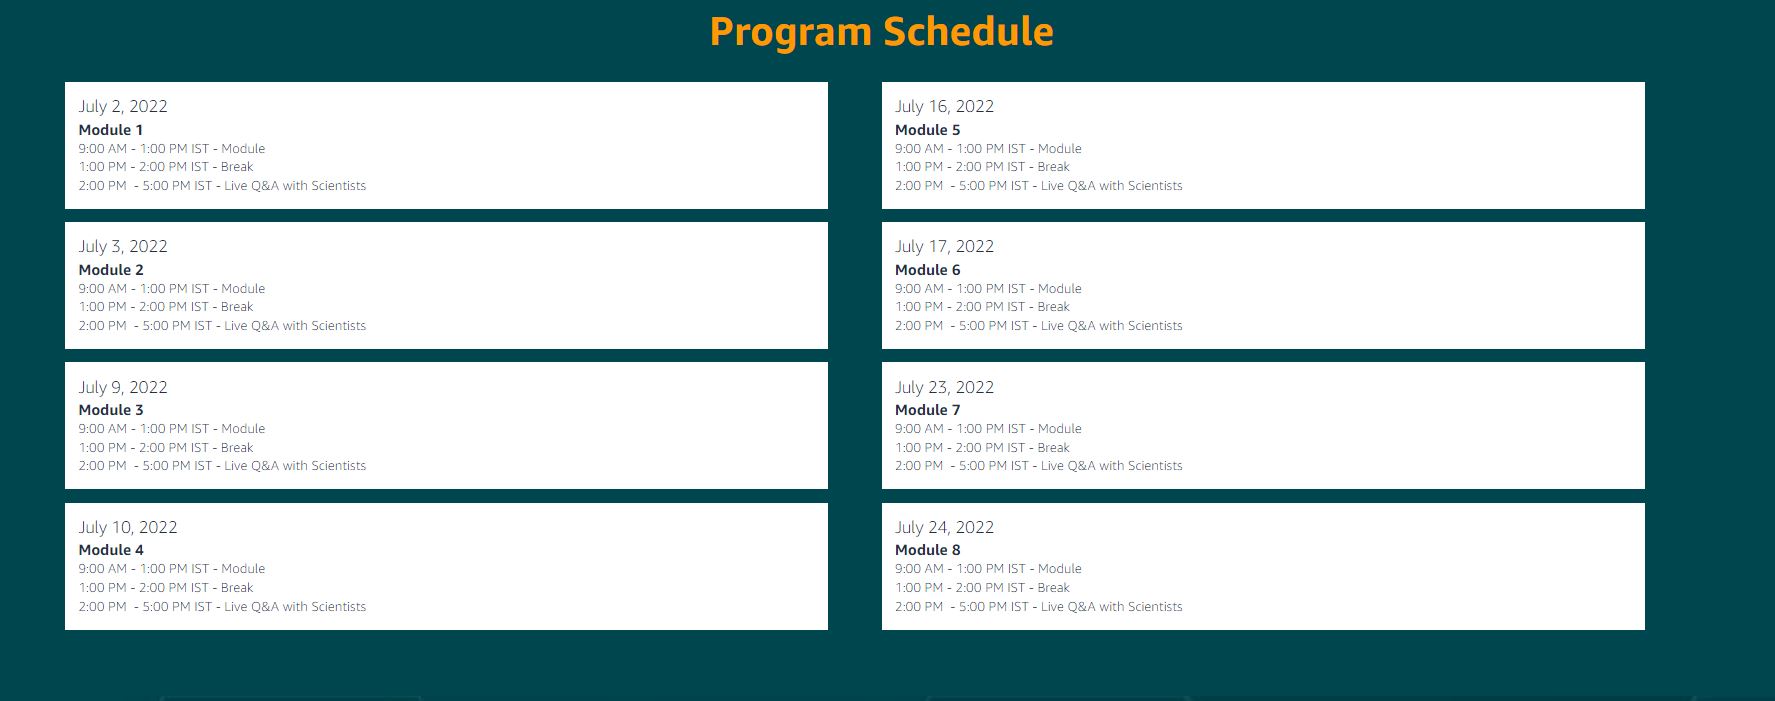 Amazon ML Summer School India Program Schedule